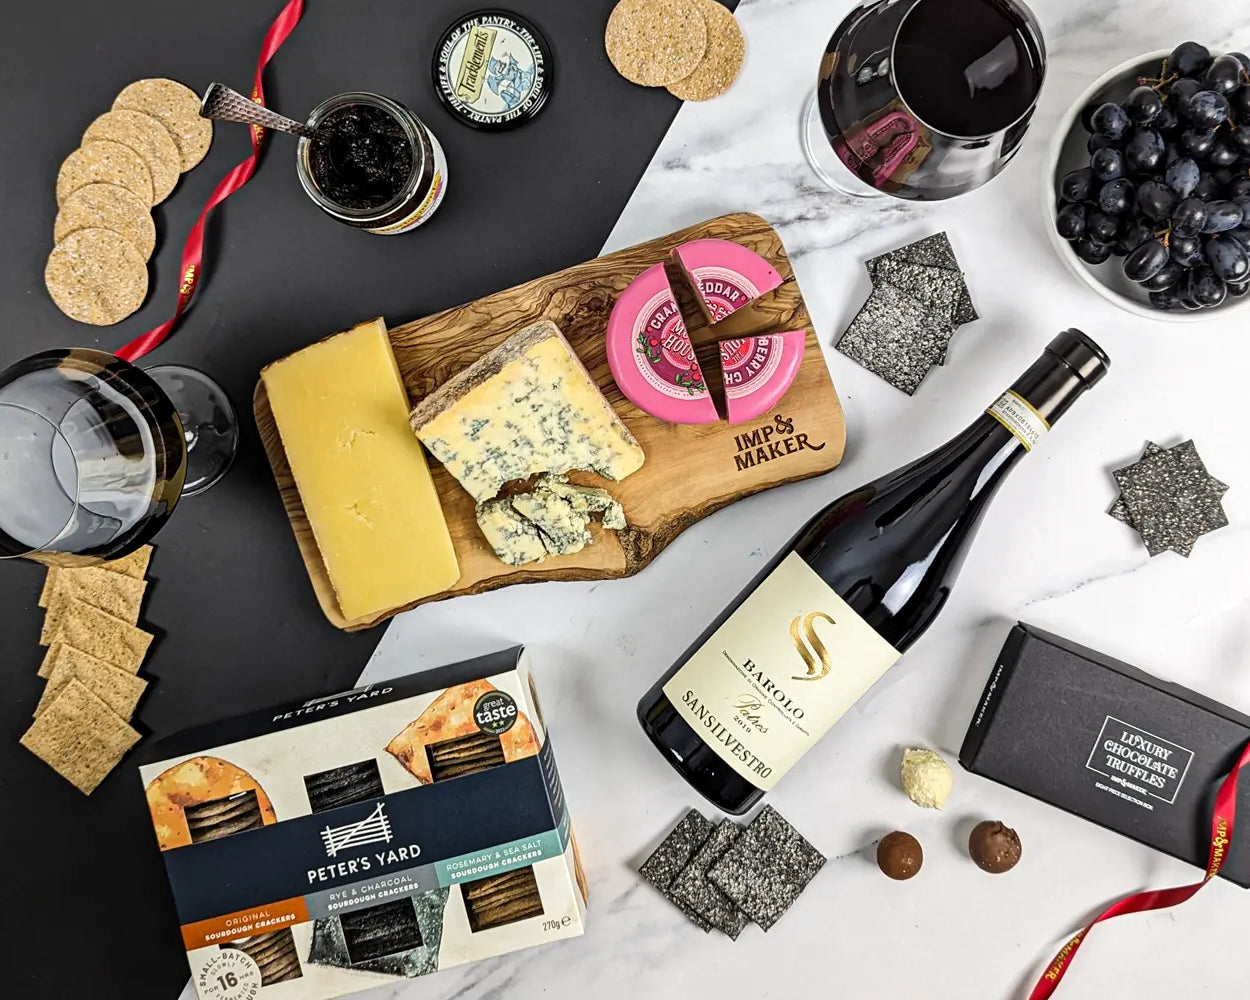 Luxury Wine and Cheese Hamper - IMP & MAKER